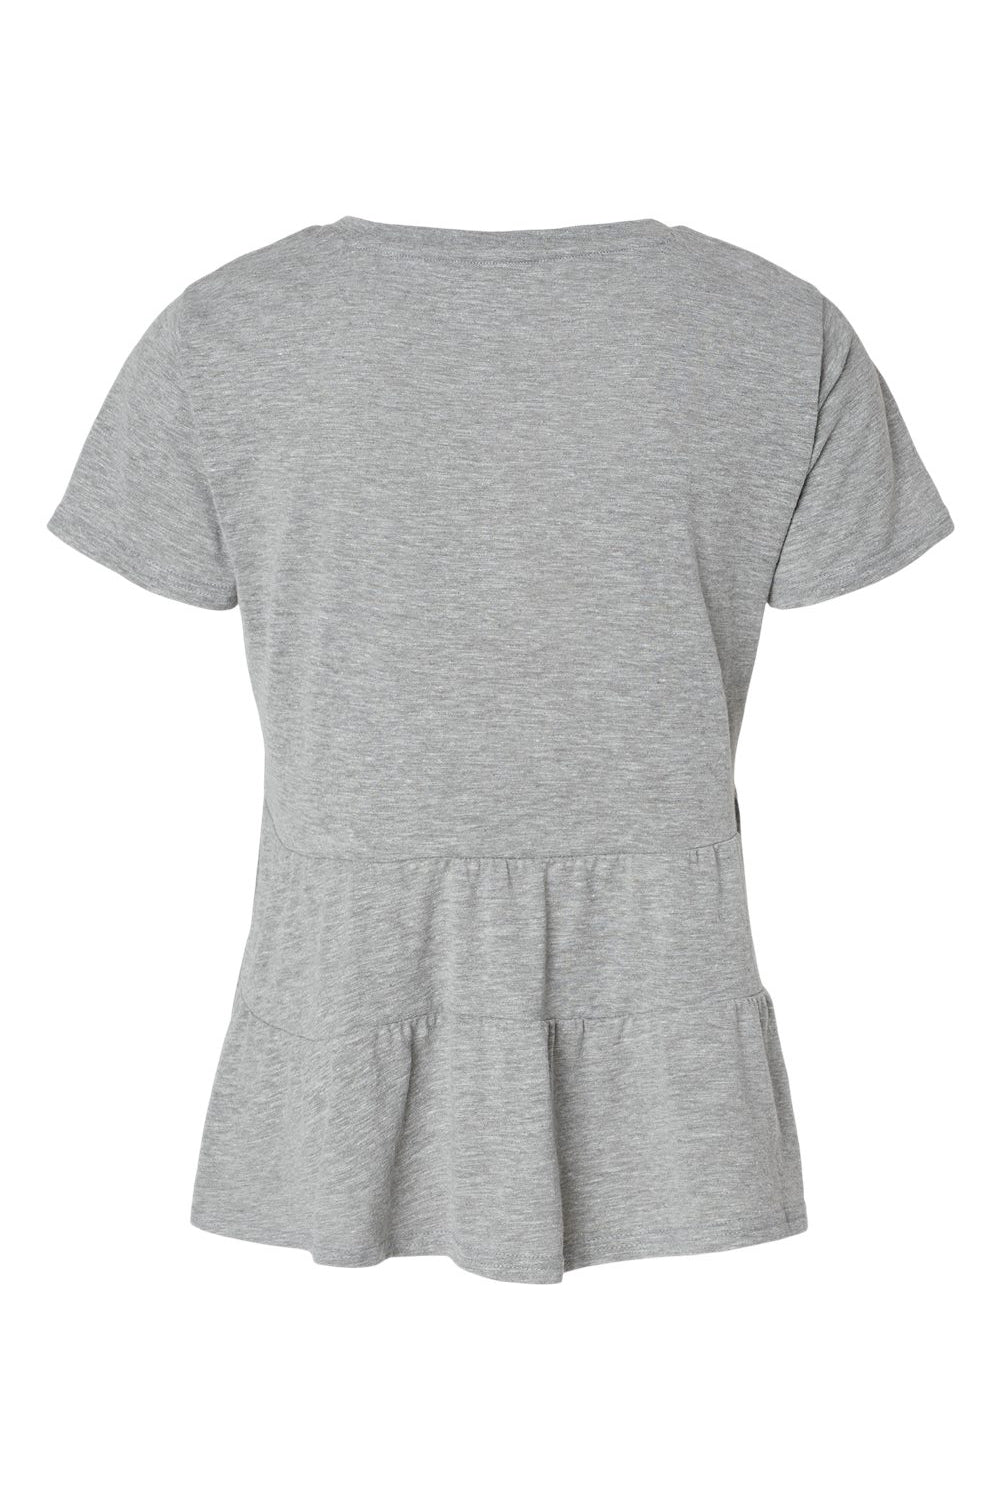 Boxercraft BW2401 Womens Willow Short Sleeve Crewneck T-Shirt Heather Oxford Grey Flat Back